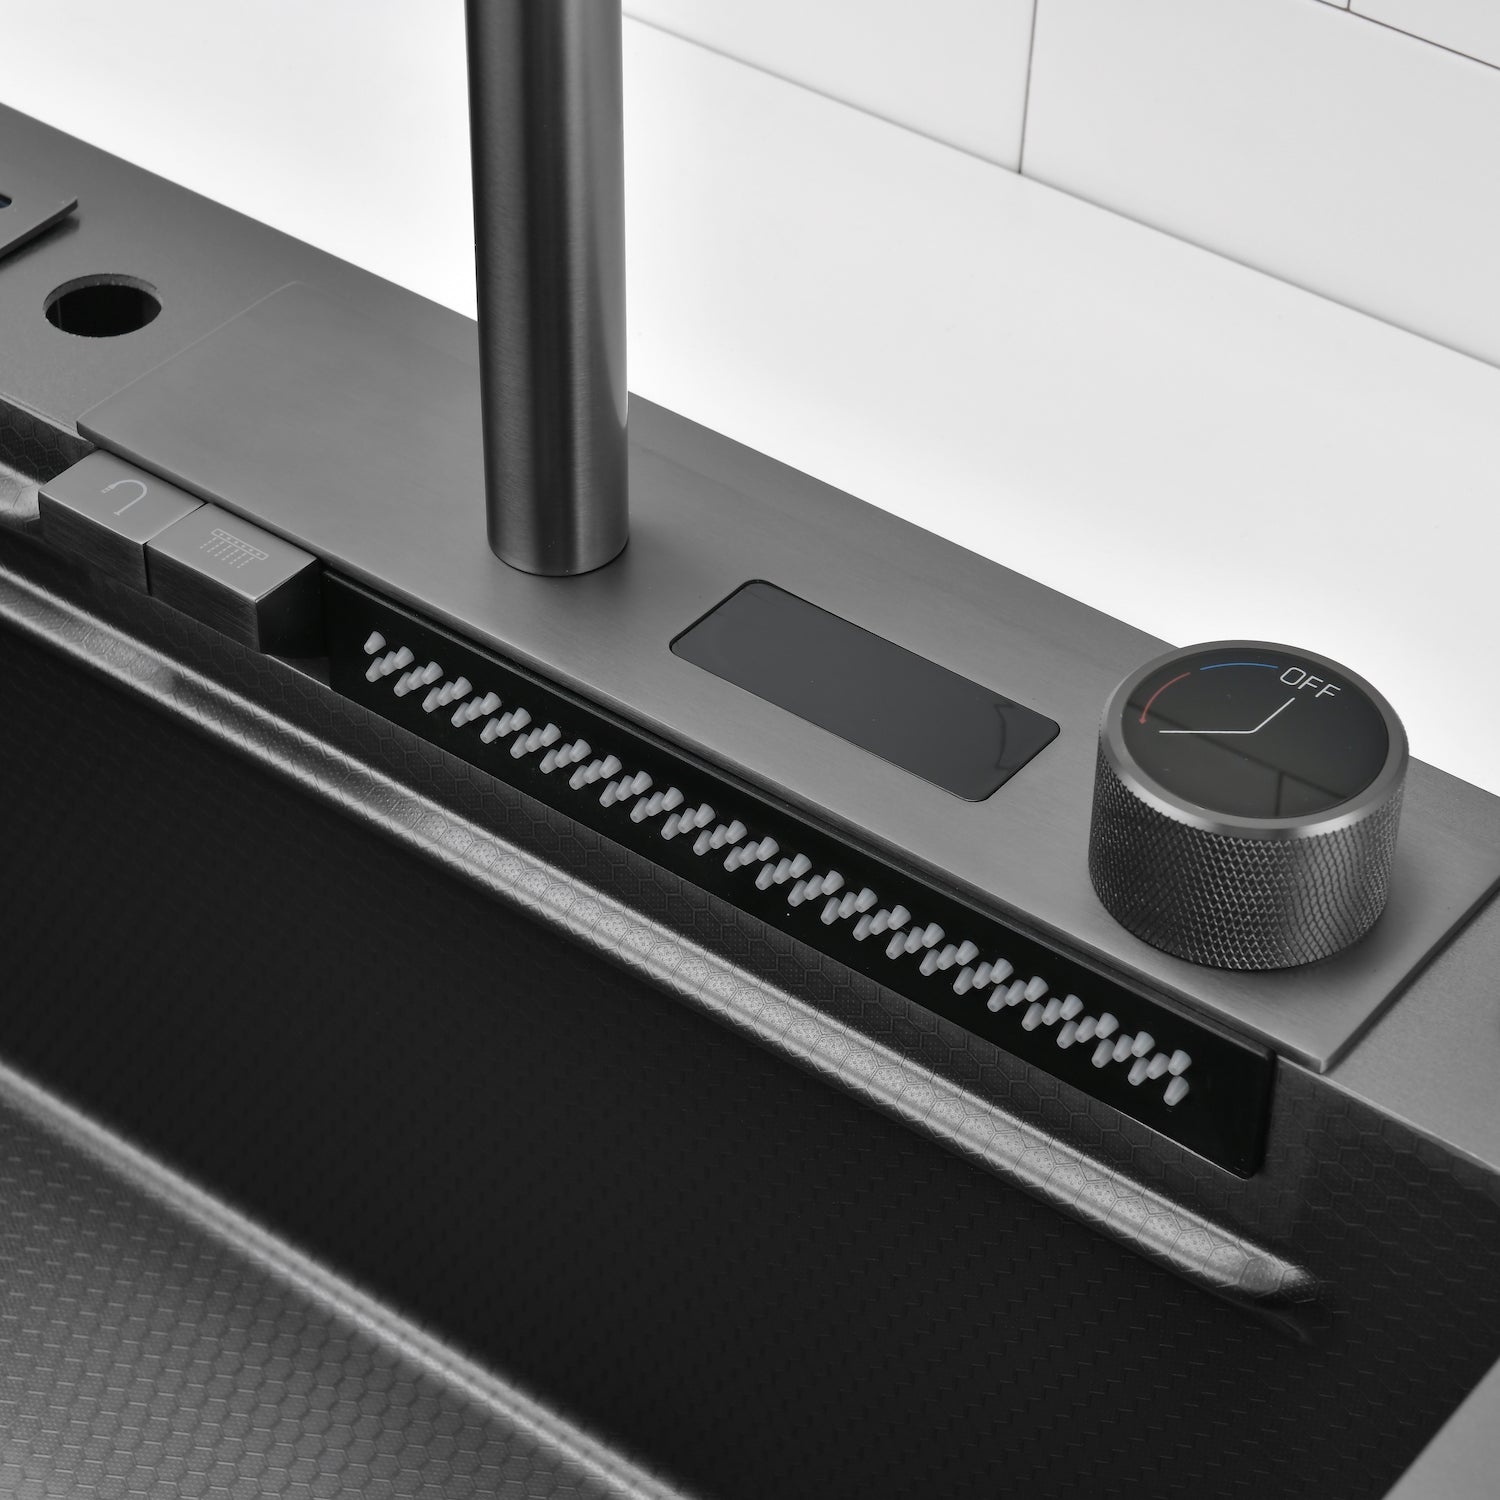 Lefton Smart Workstation Kitchen Sink Set With Digital Temperature Display Waterfall Faucet & Knife Holder